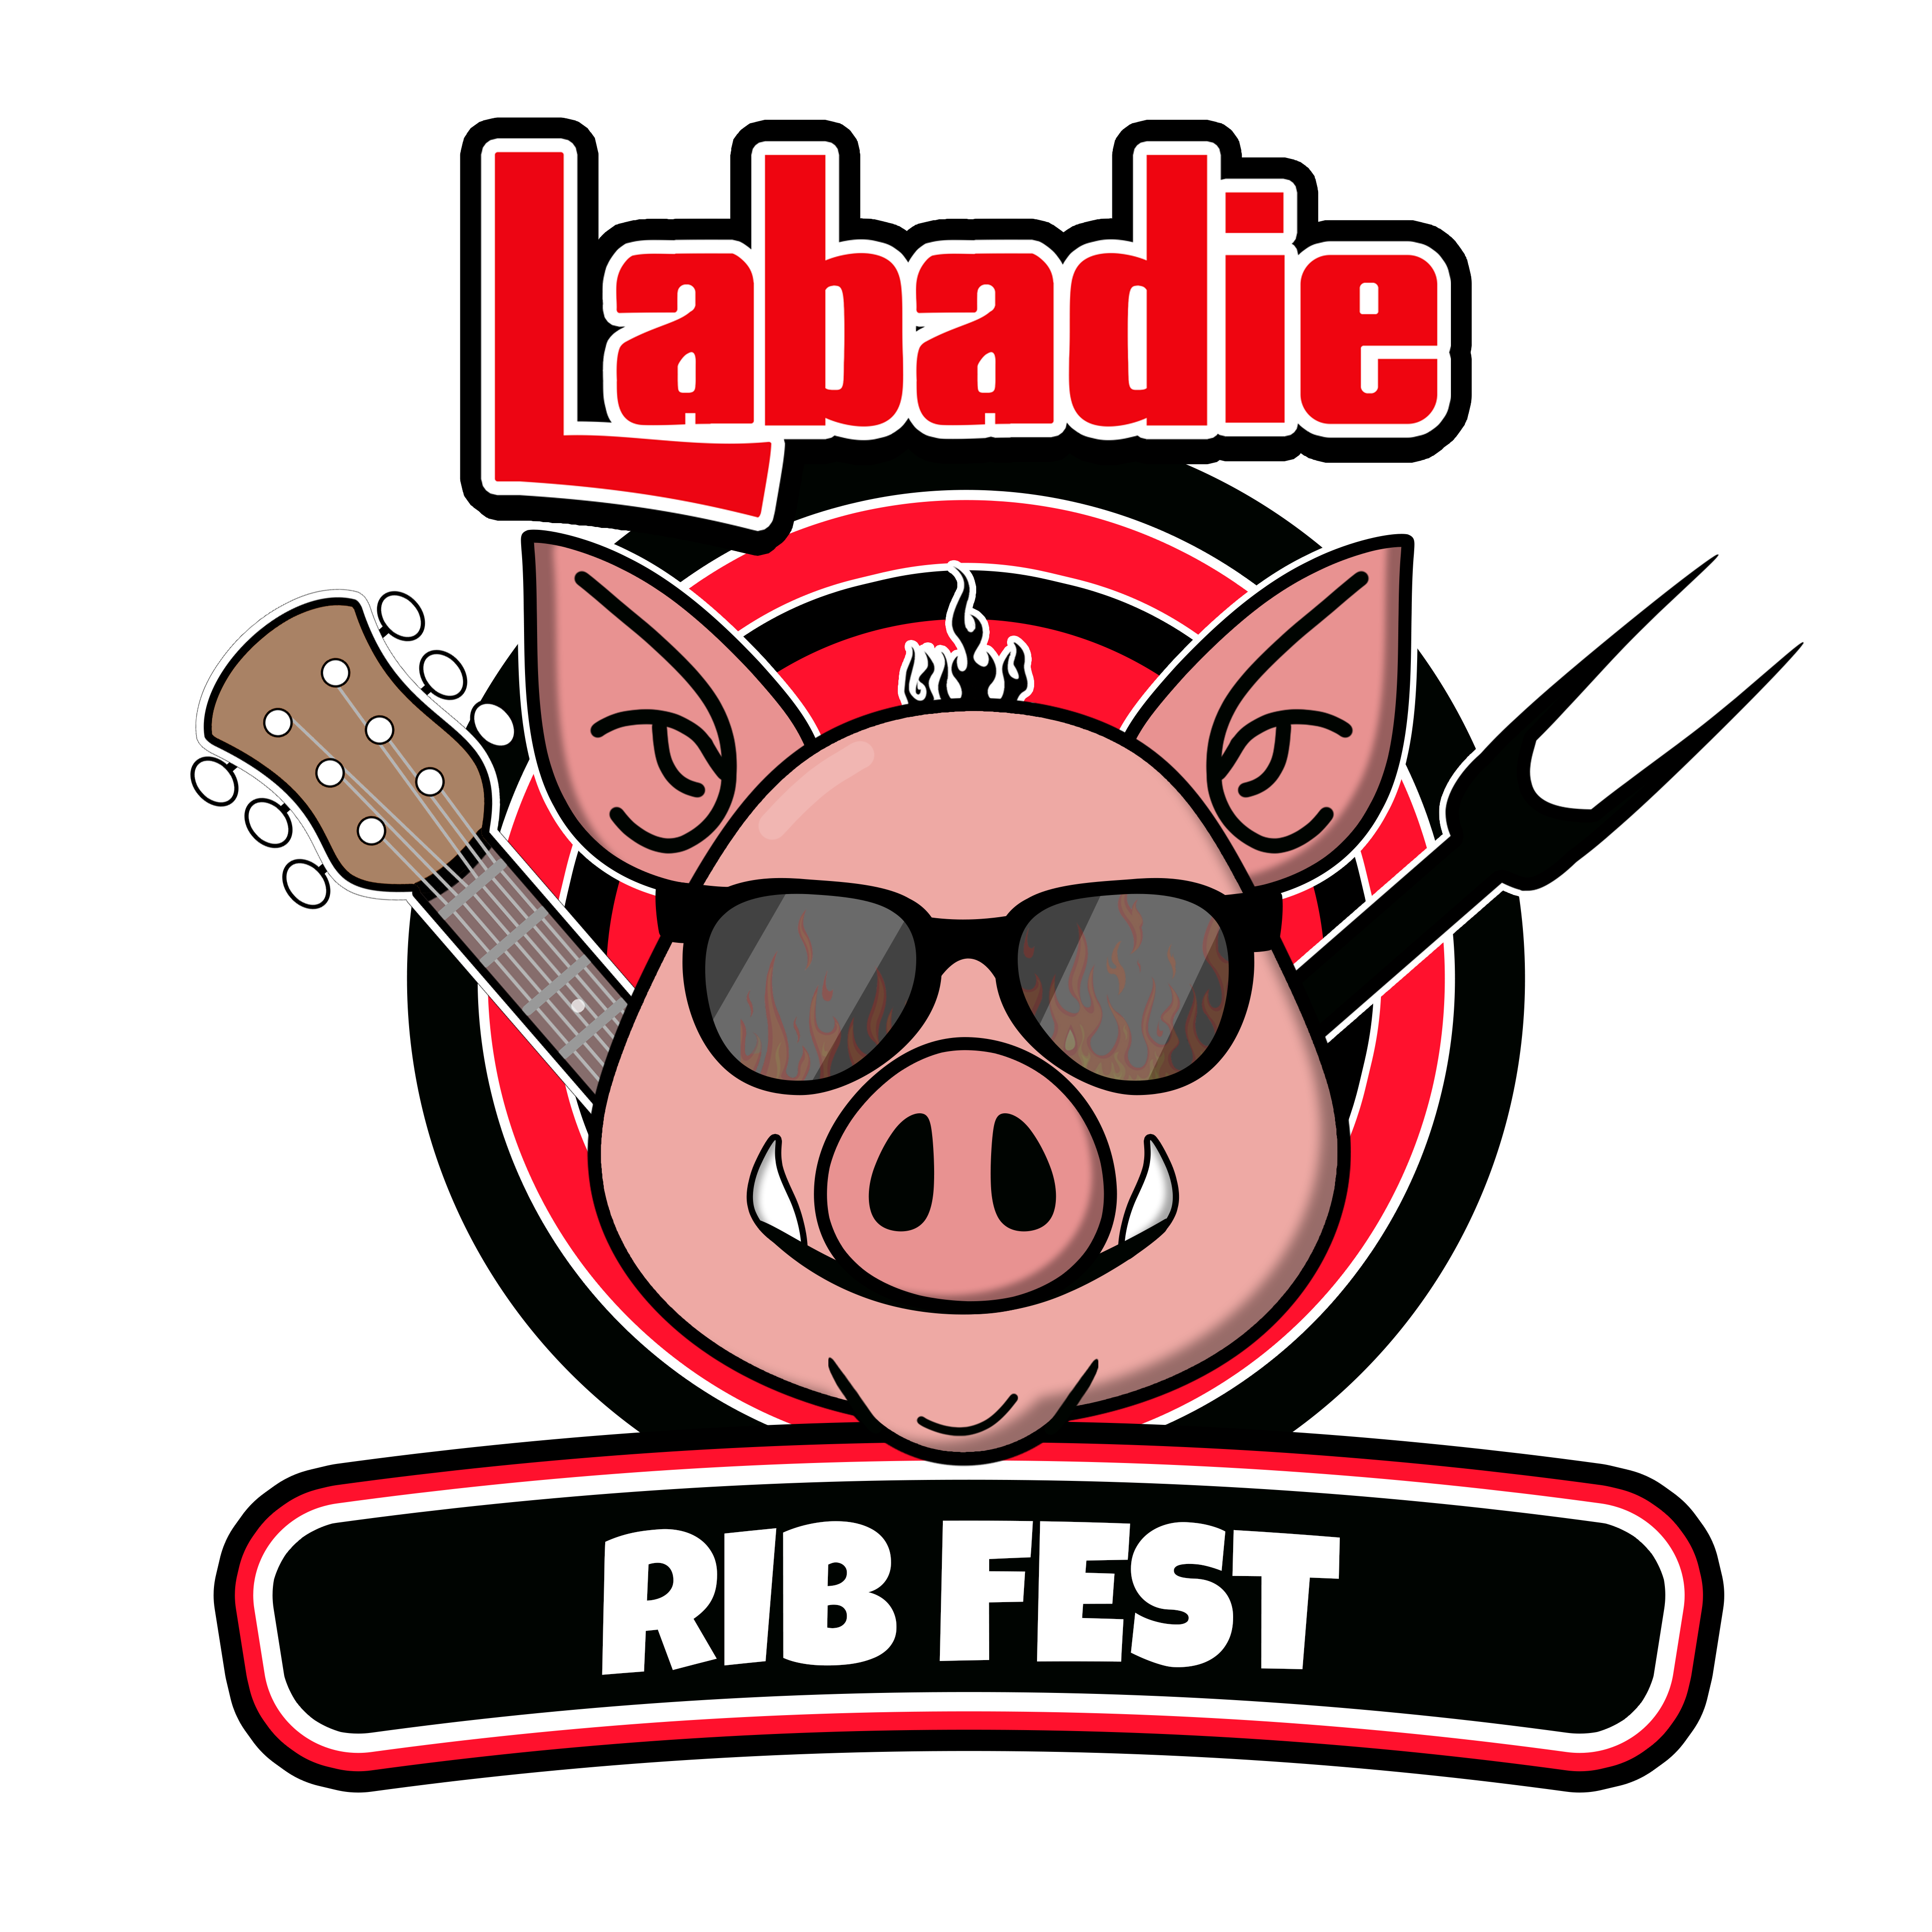 Labadie Rib Fest